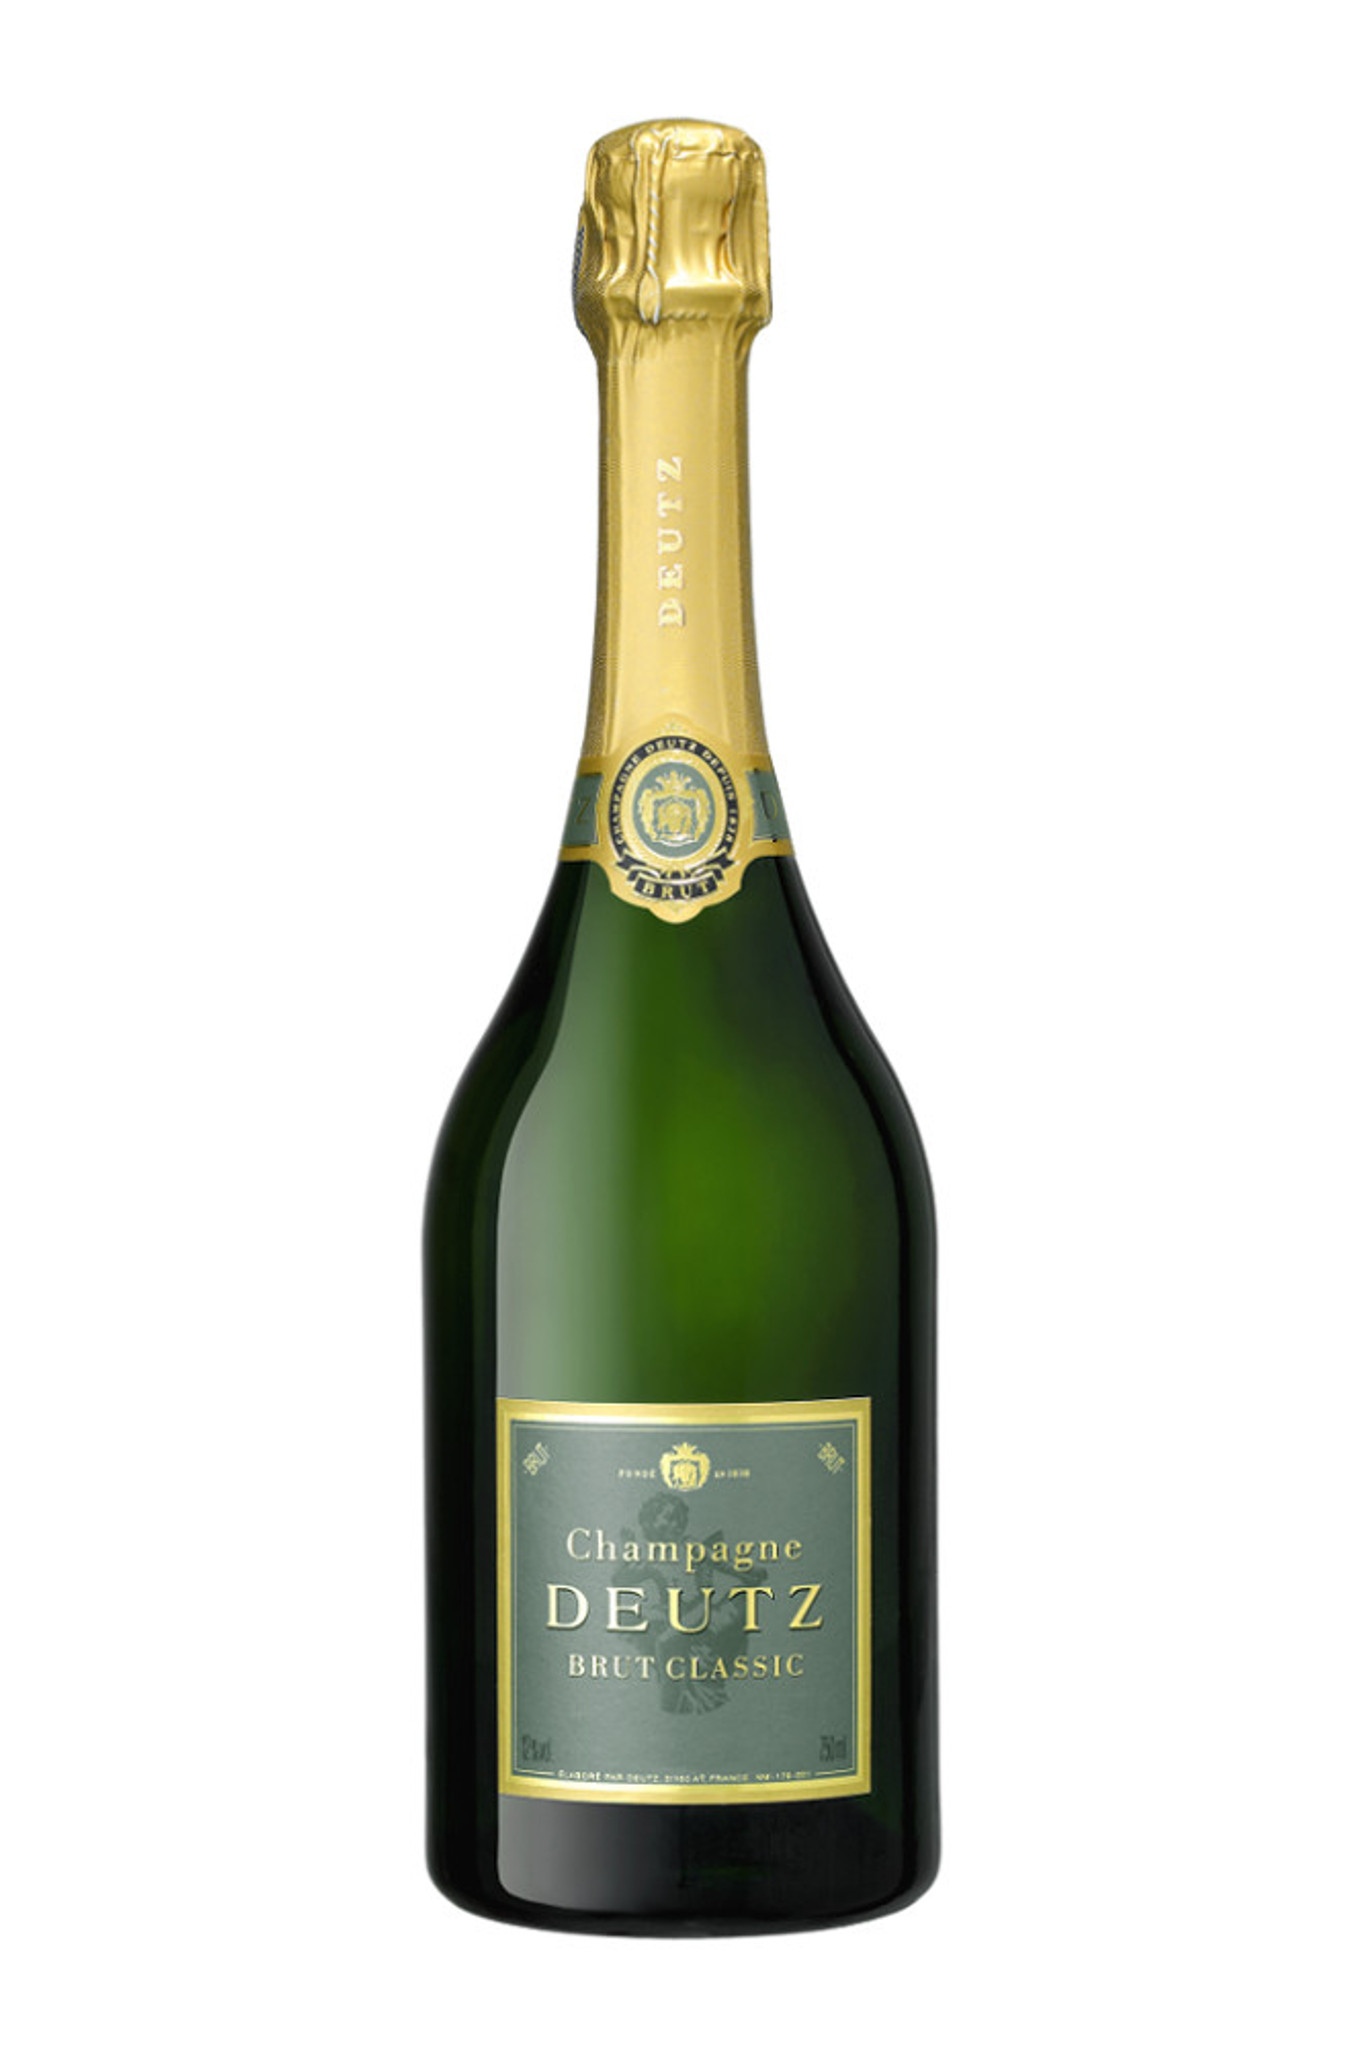 Deutz - Brut Classic - Champagne Deutz